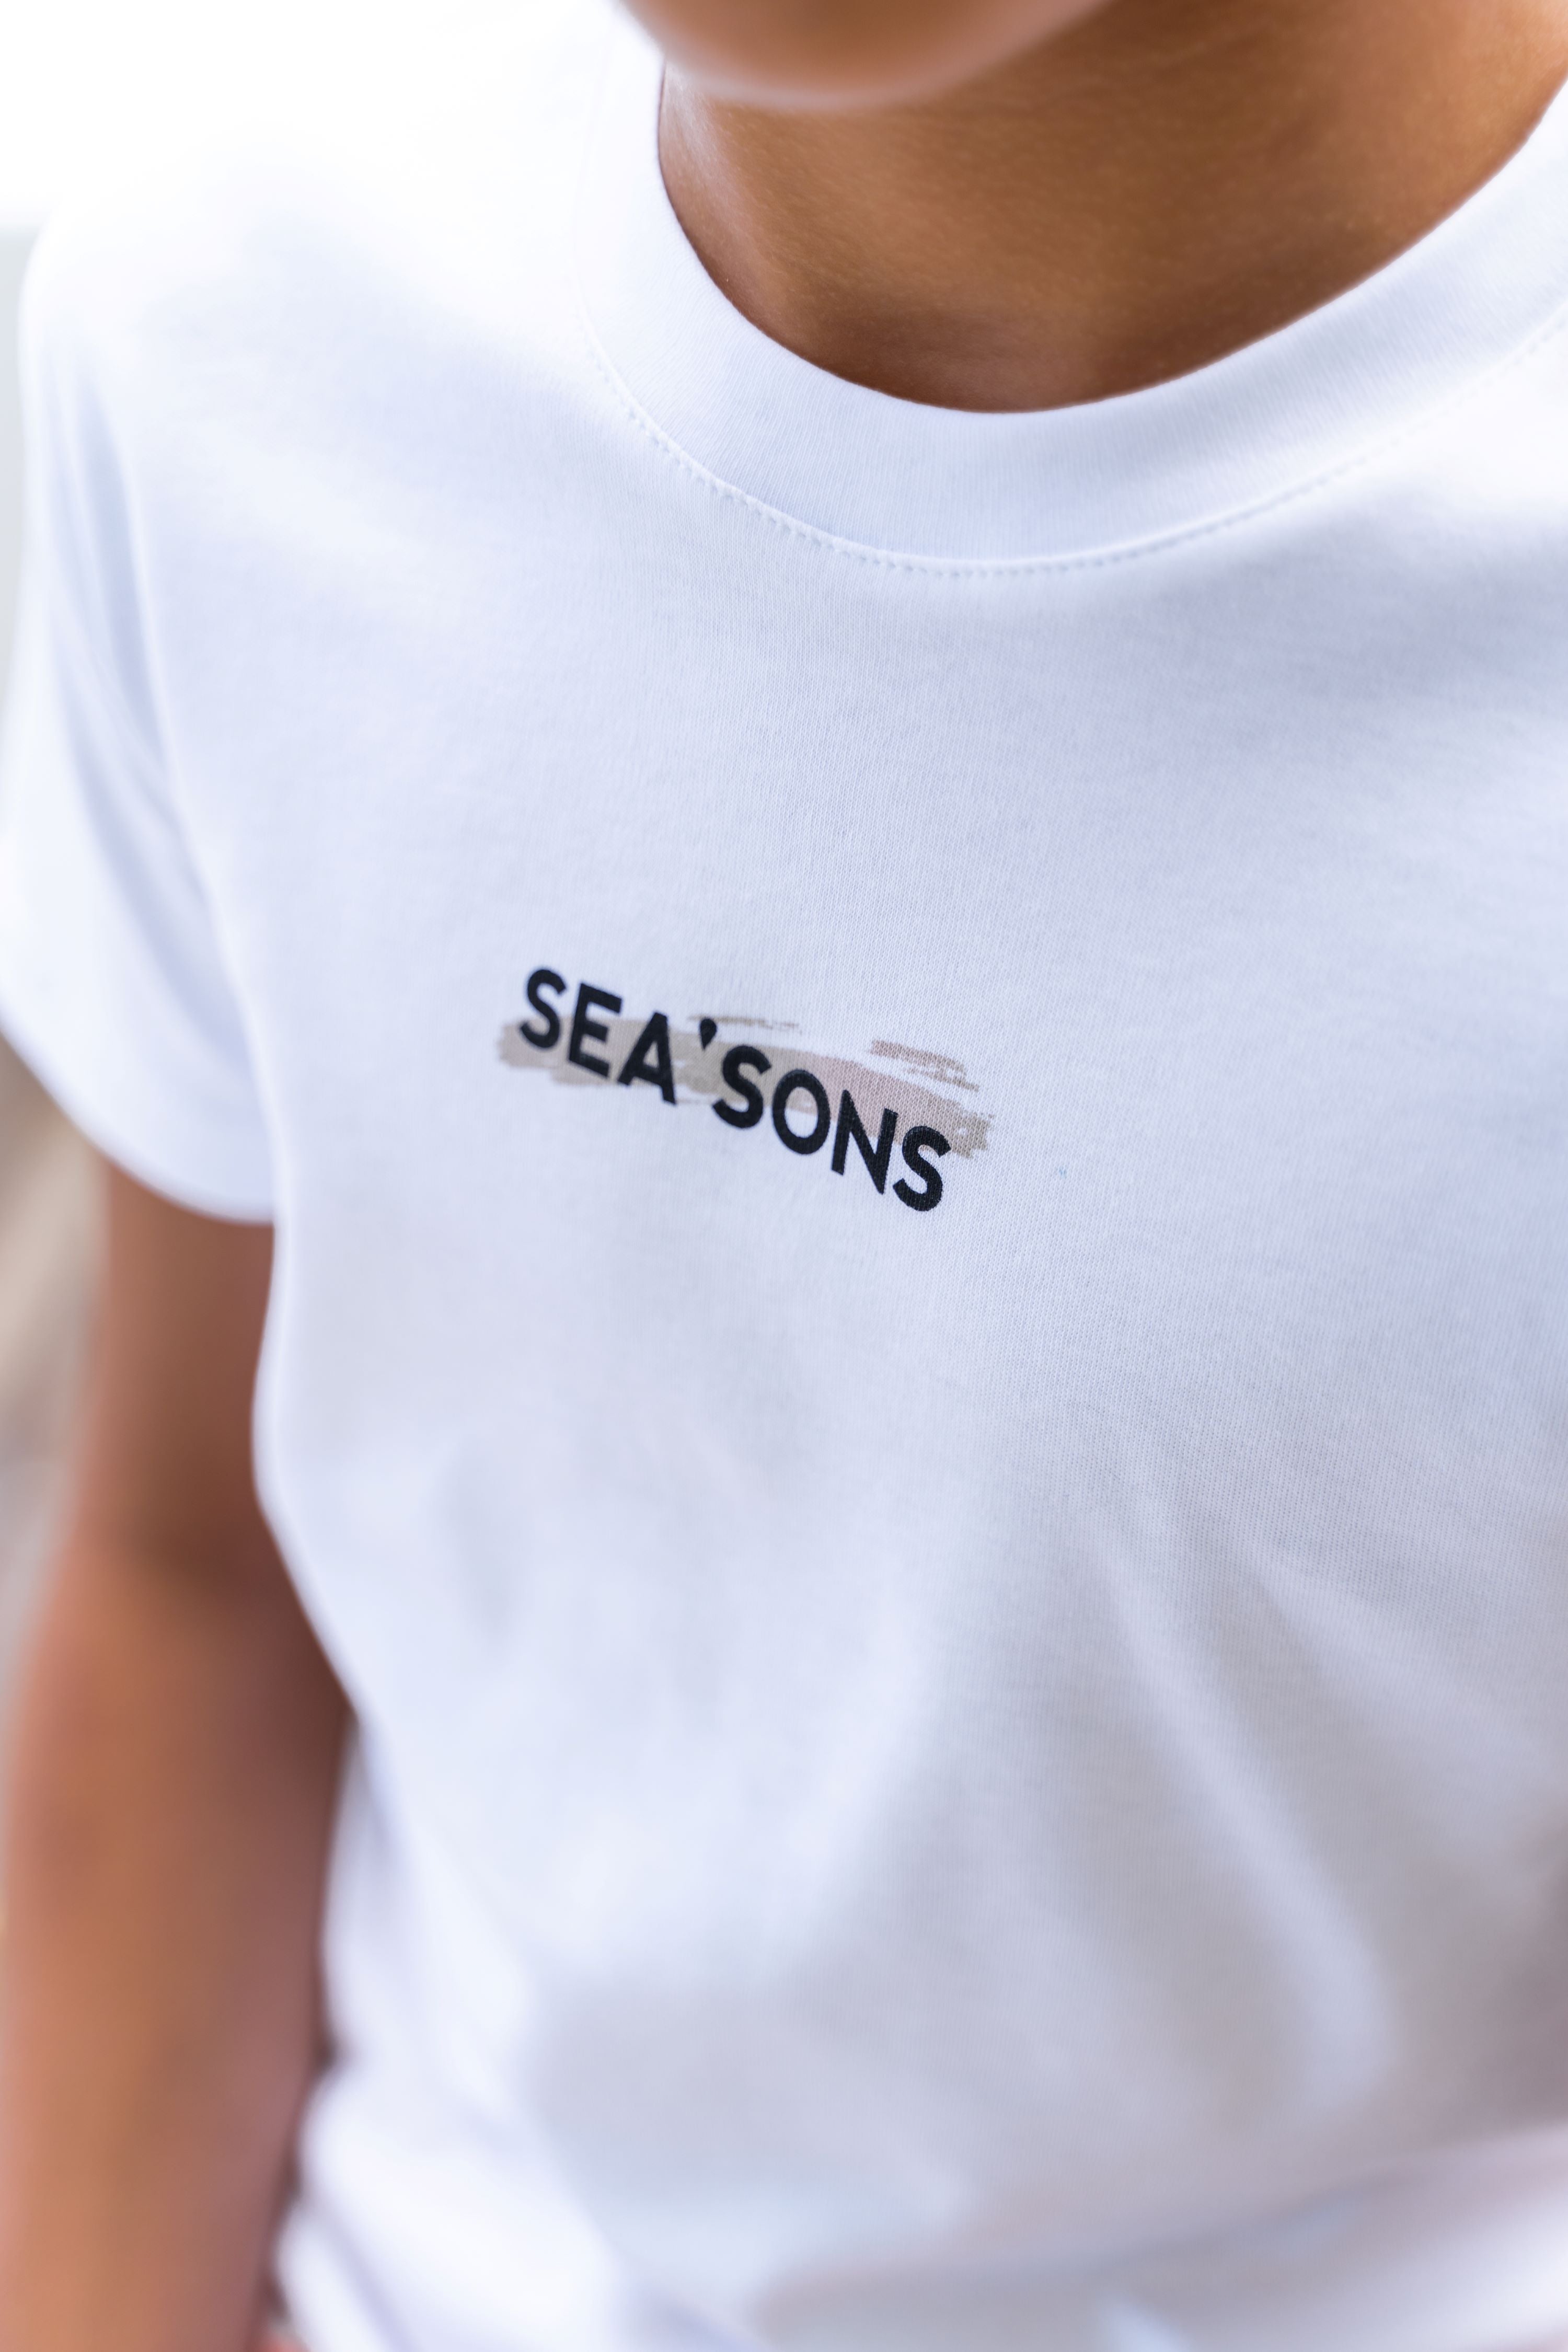 Sea'sons T-shirt heat-sensitive Orange-Yellow